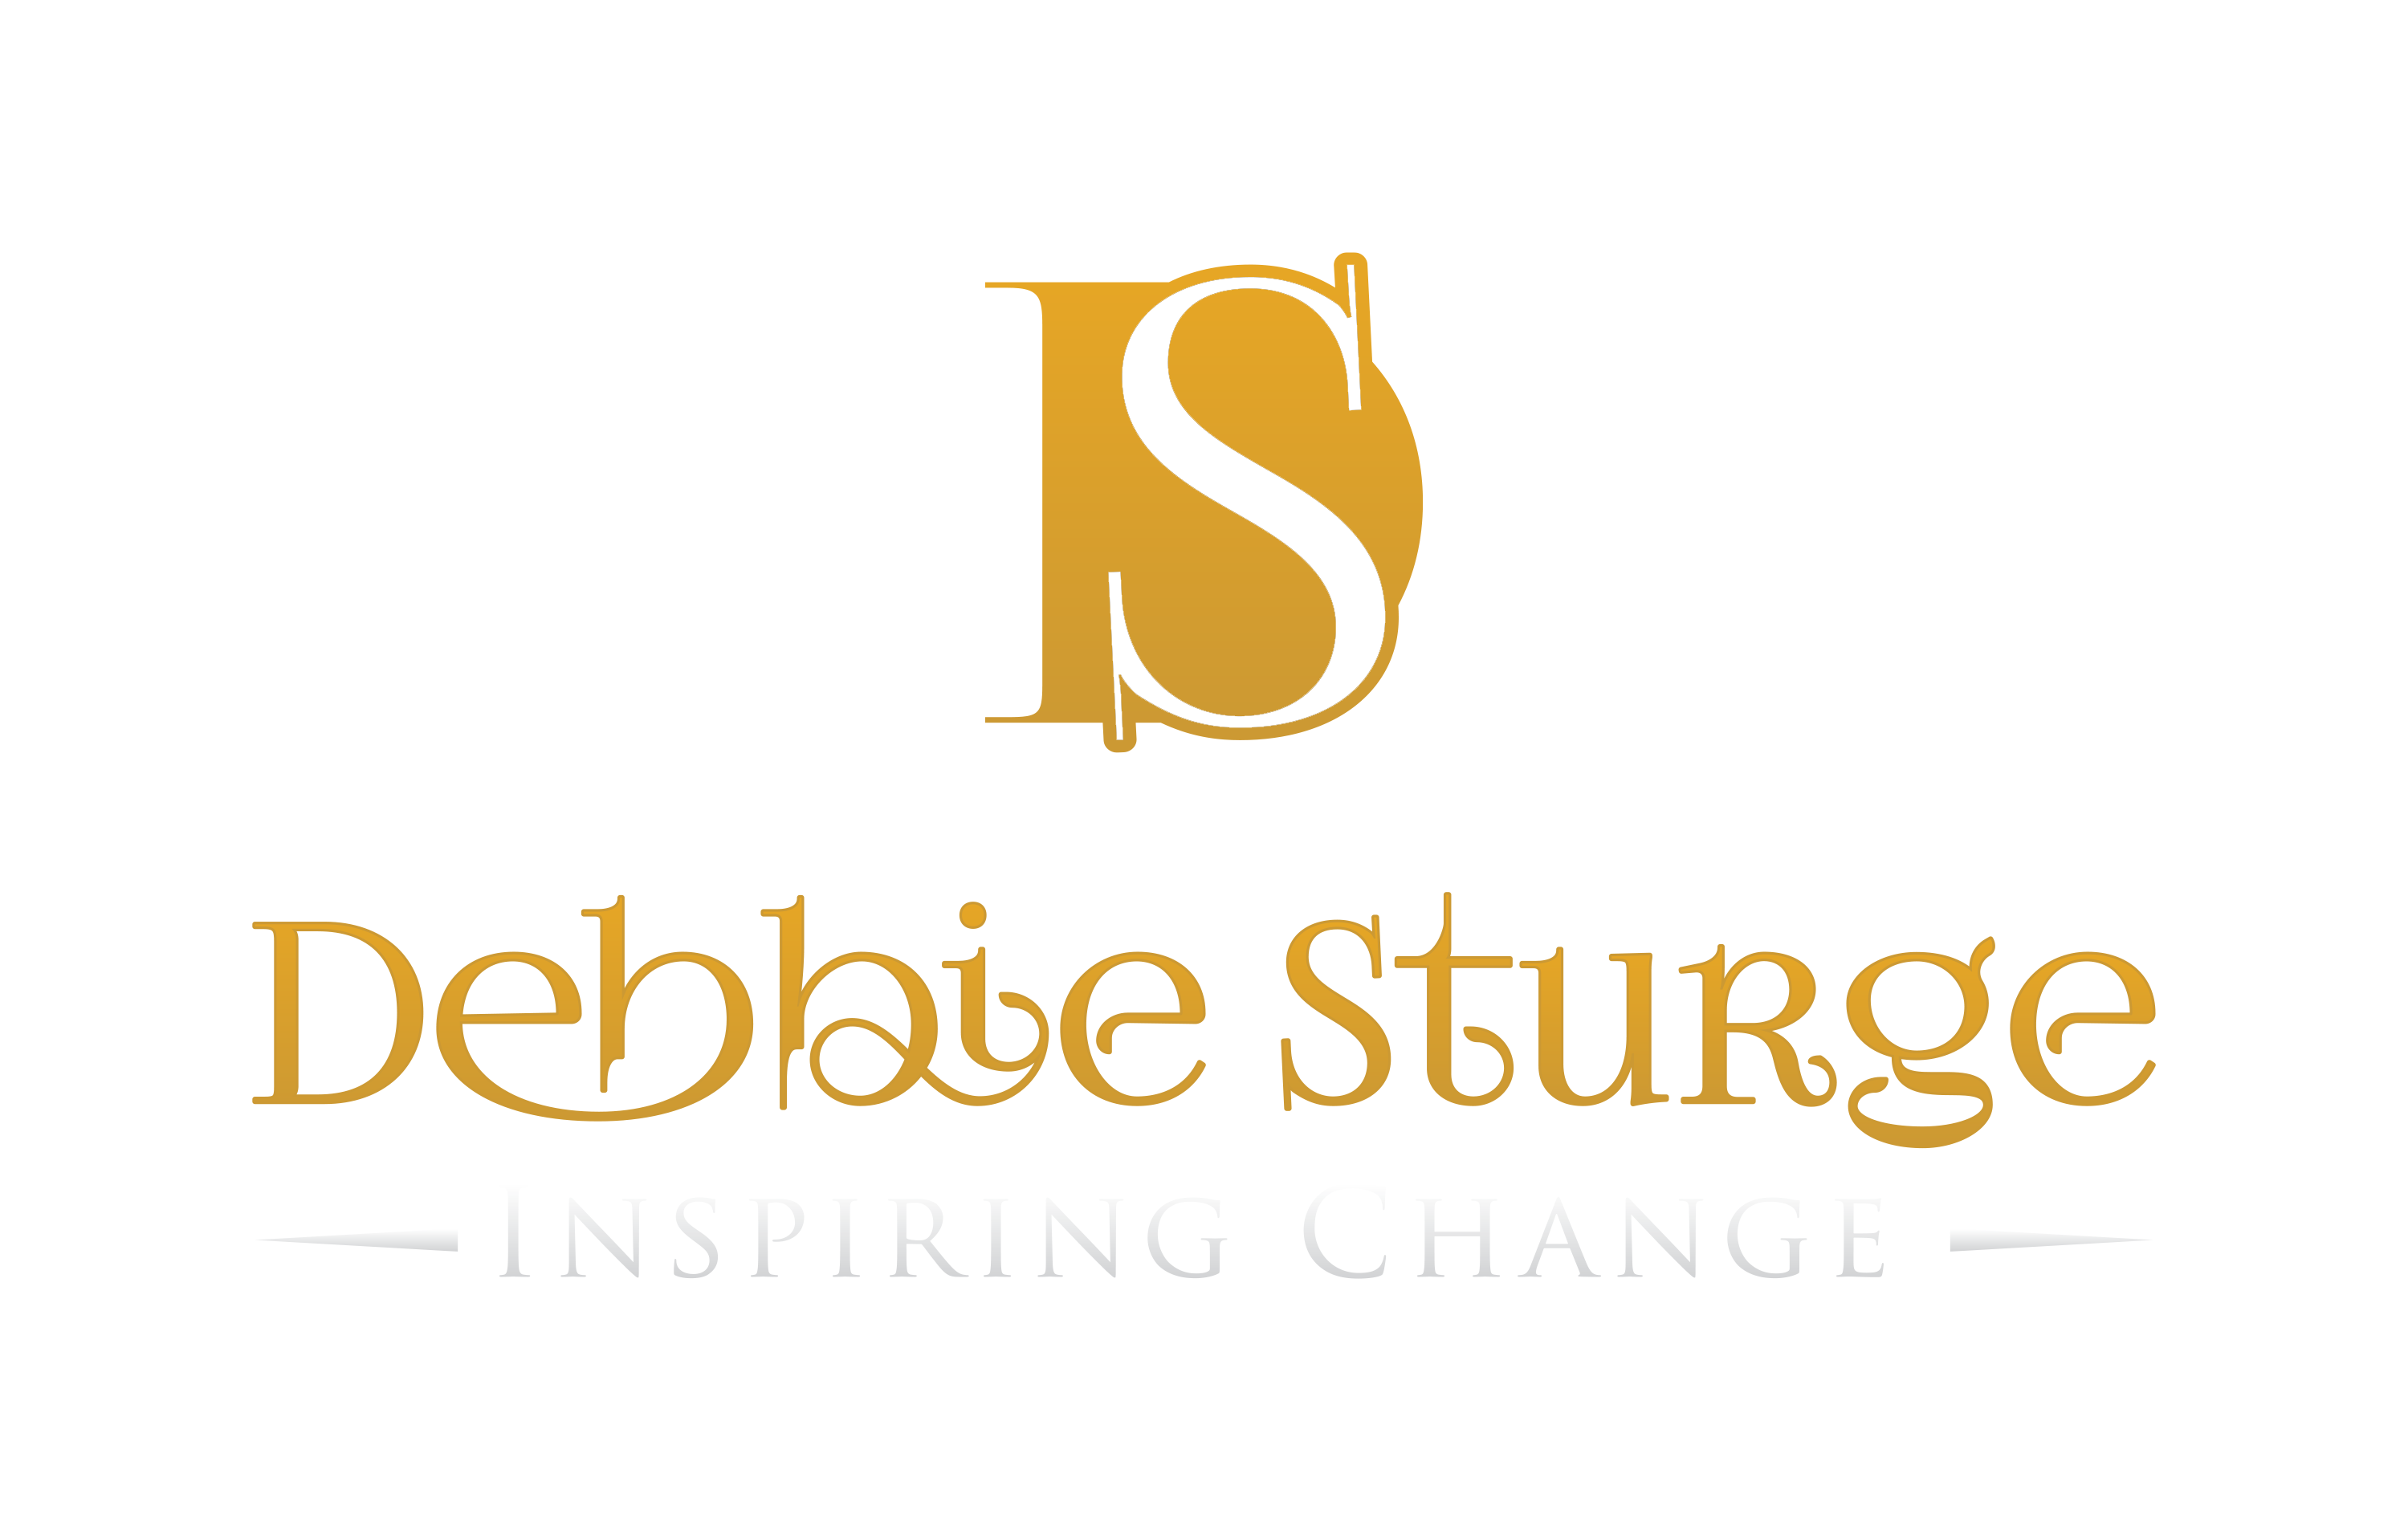 Debbie Sturge